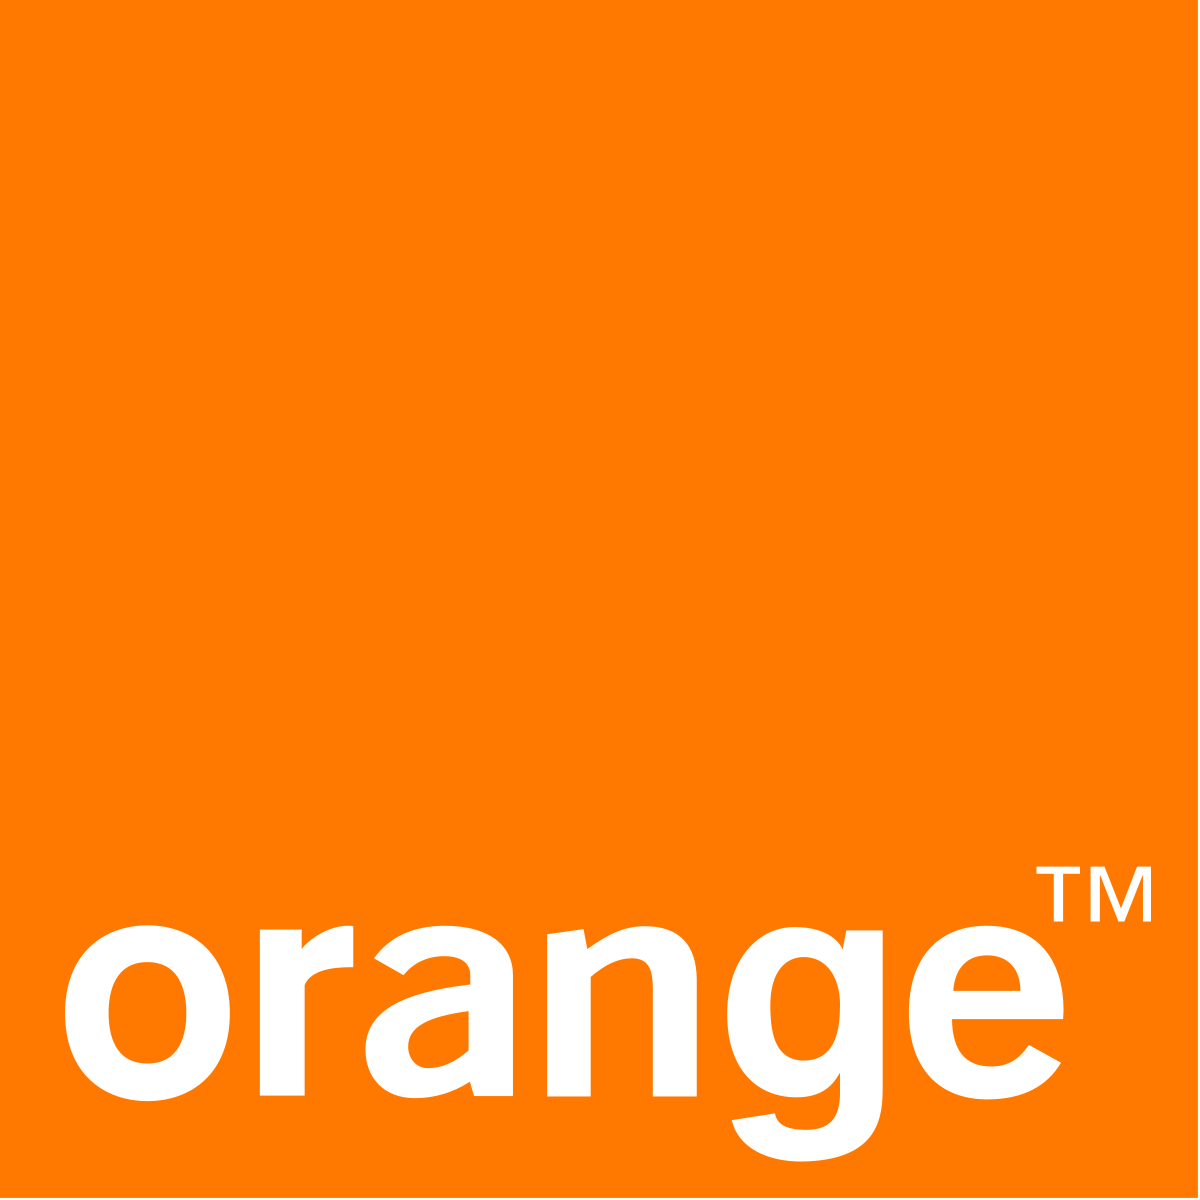 Orange France logo